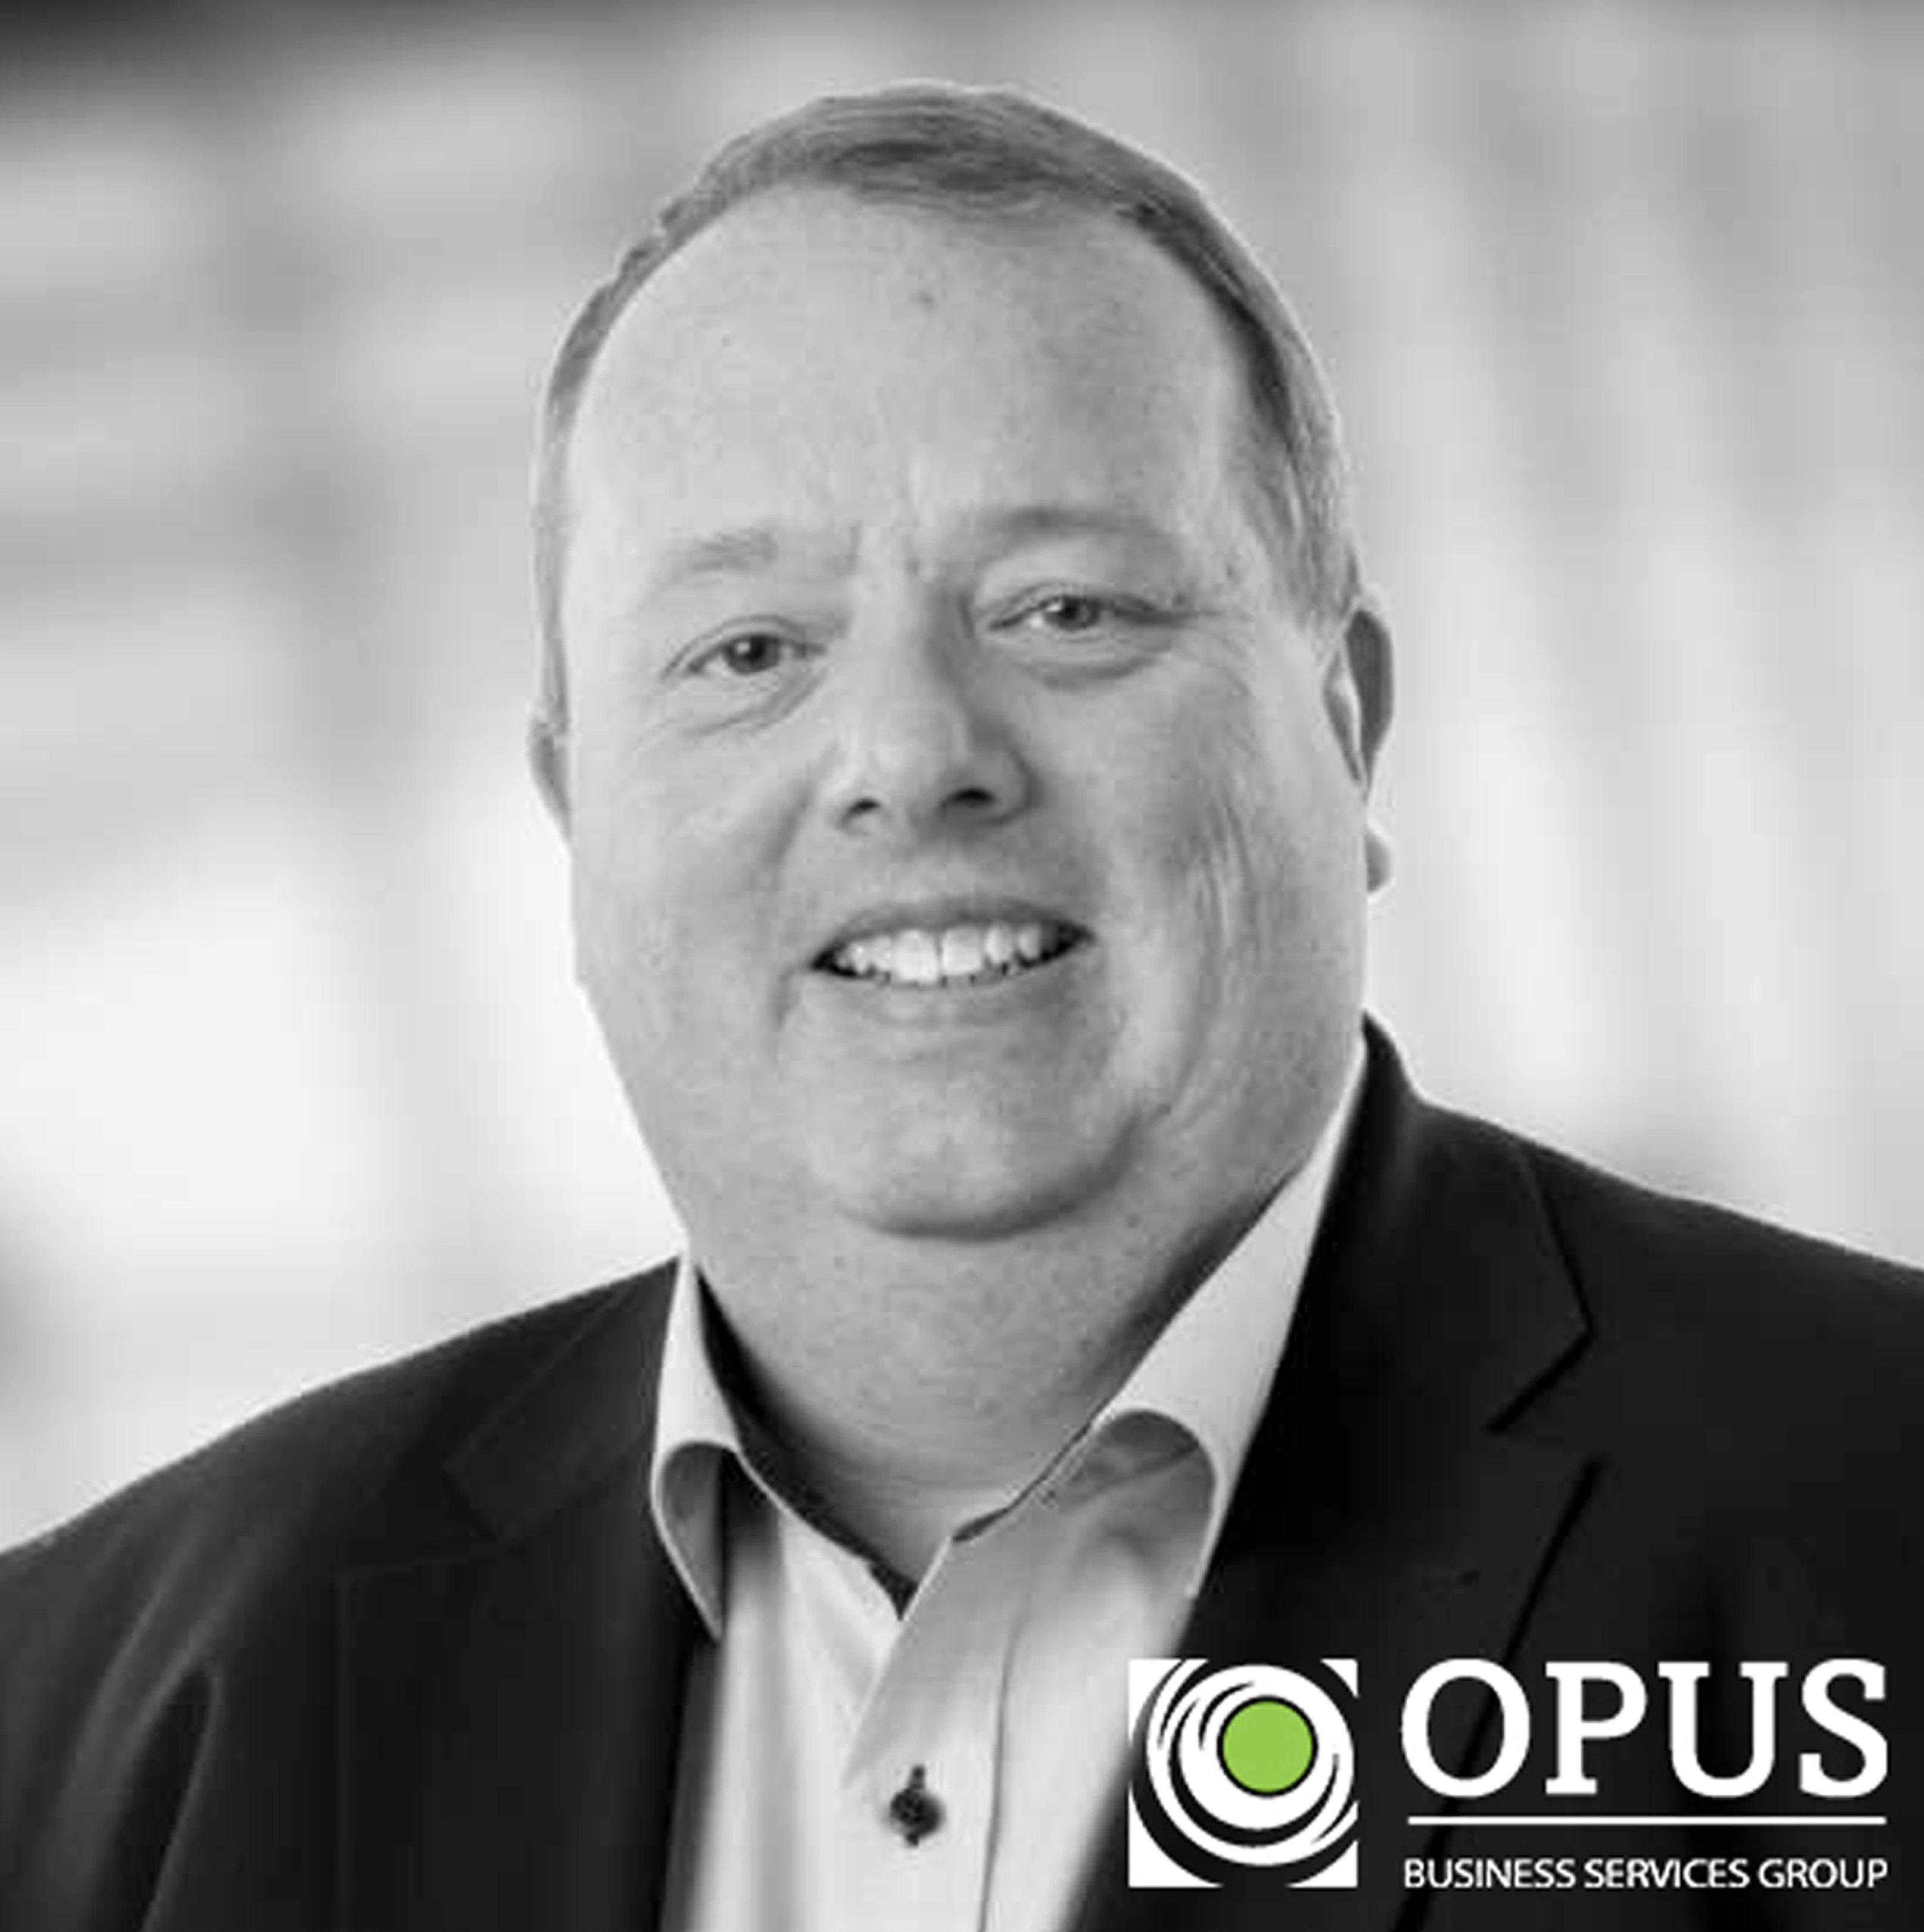 Steve Parker, Partner at Opus